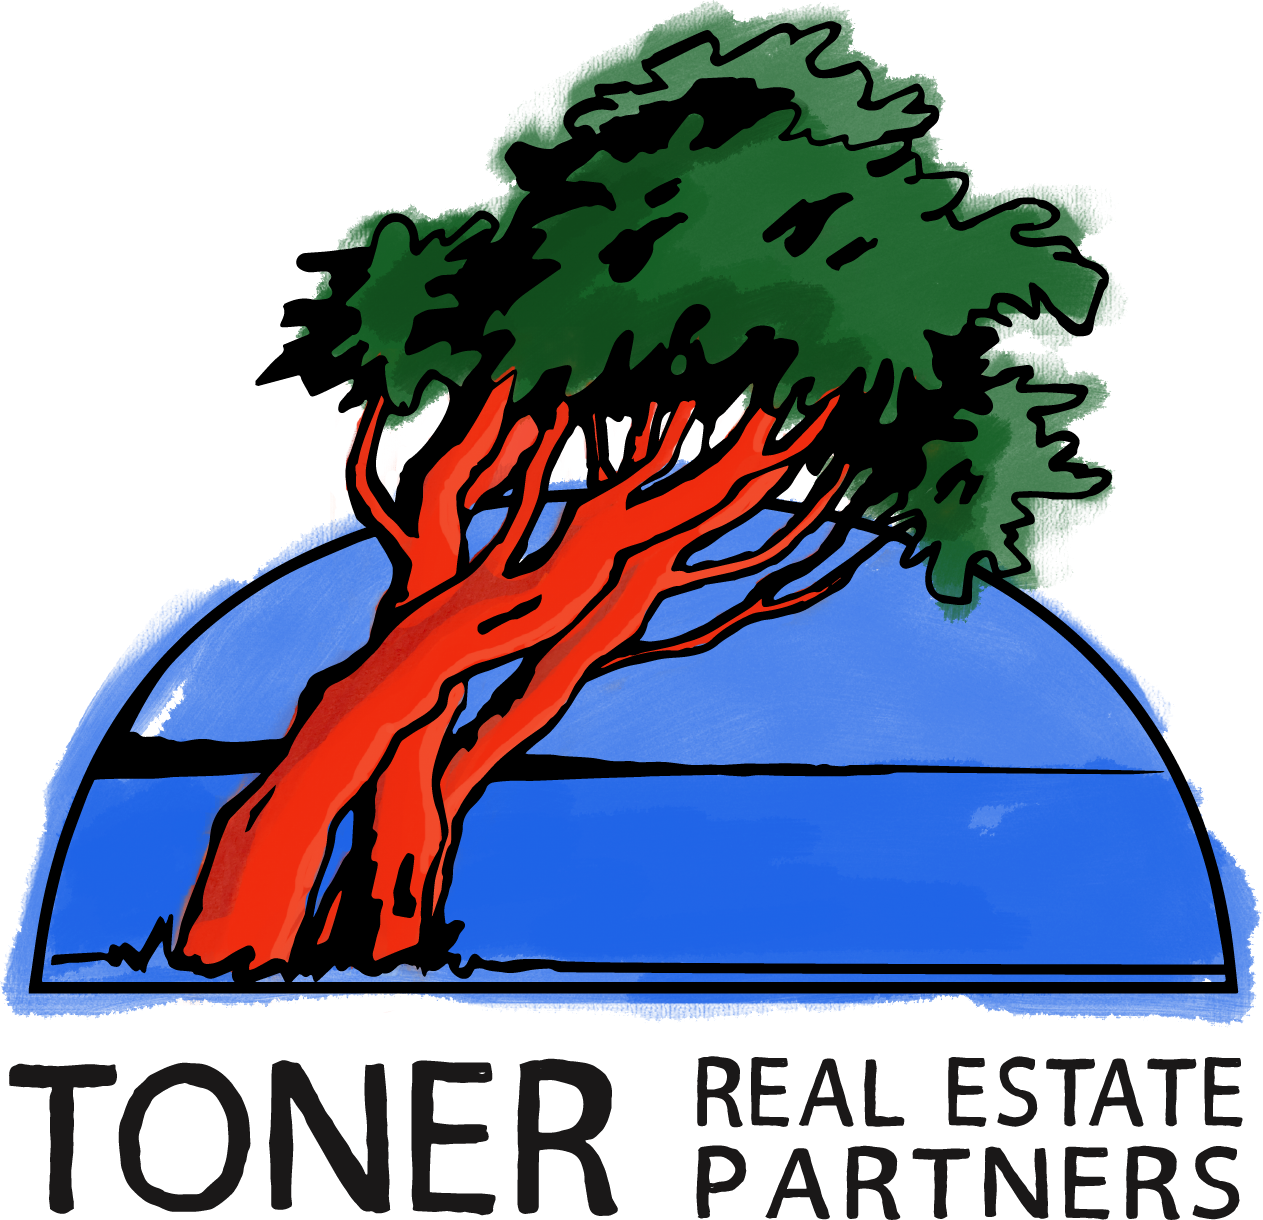 Toner Real Estate Partners